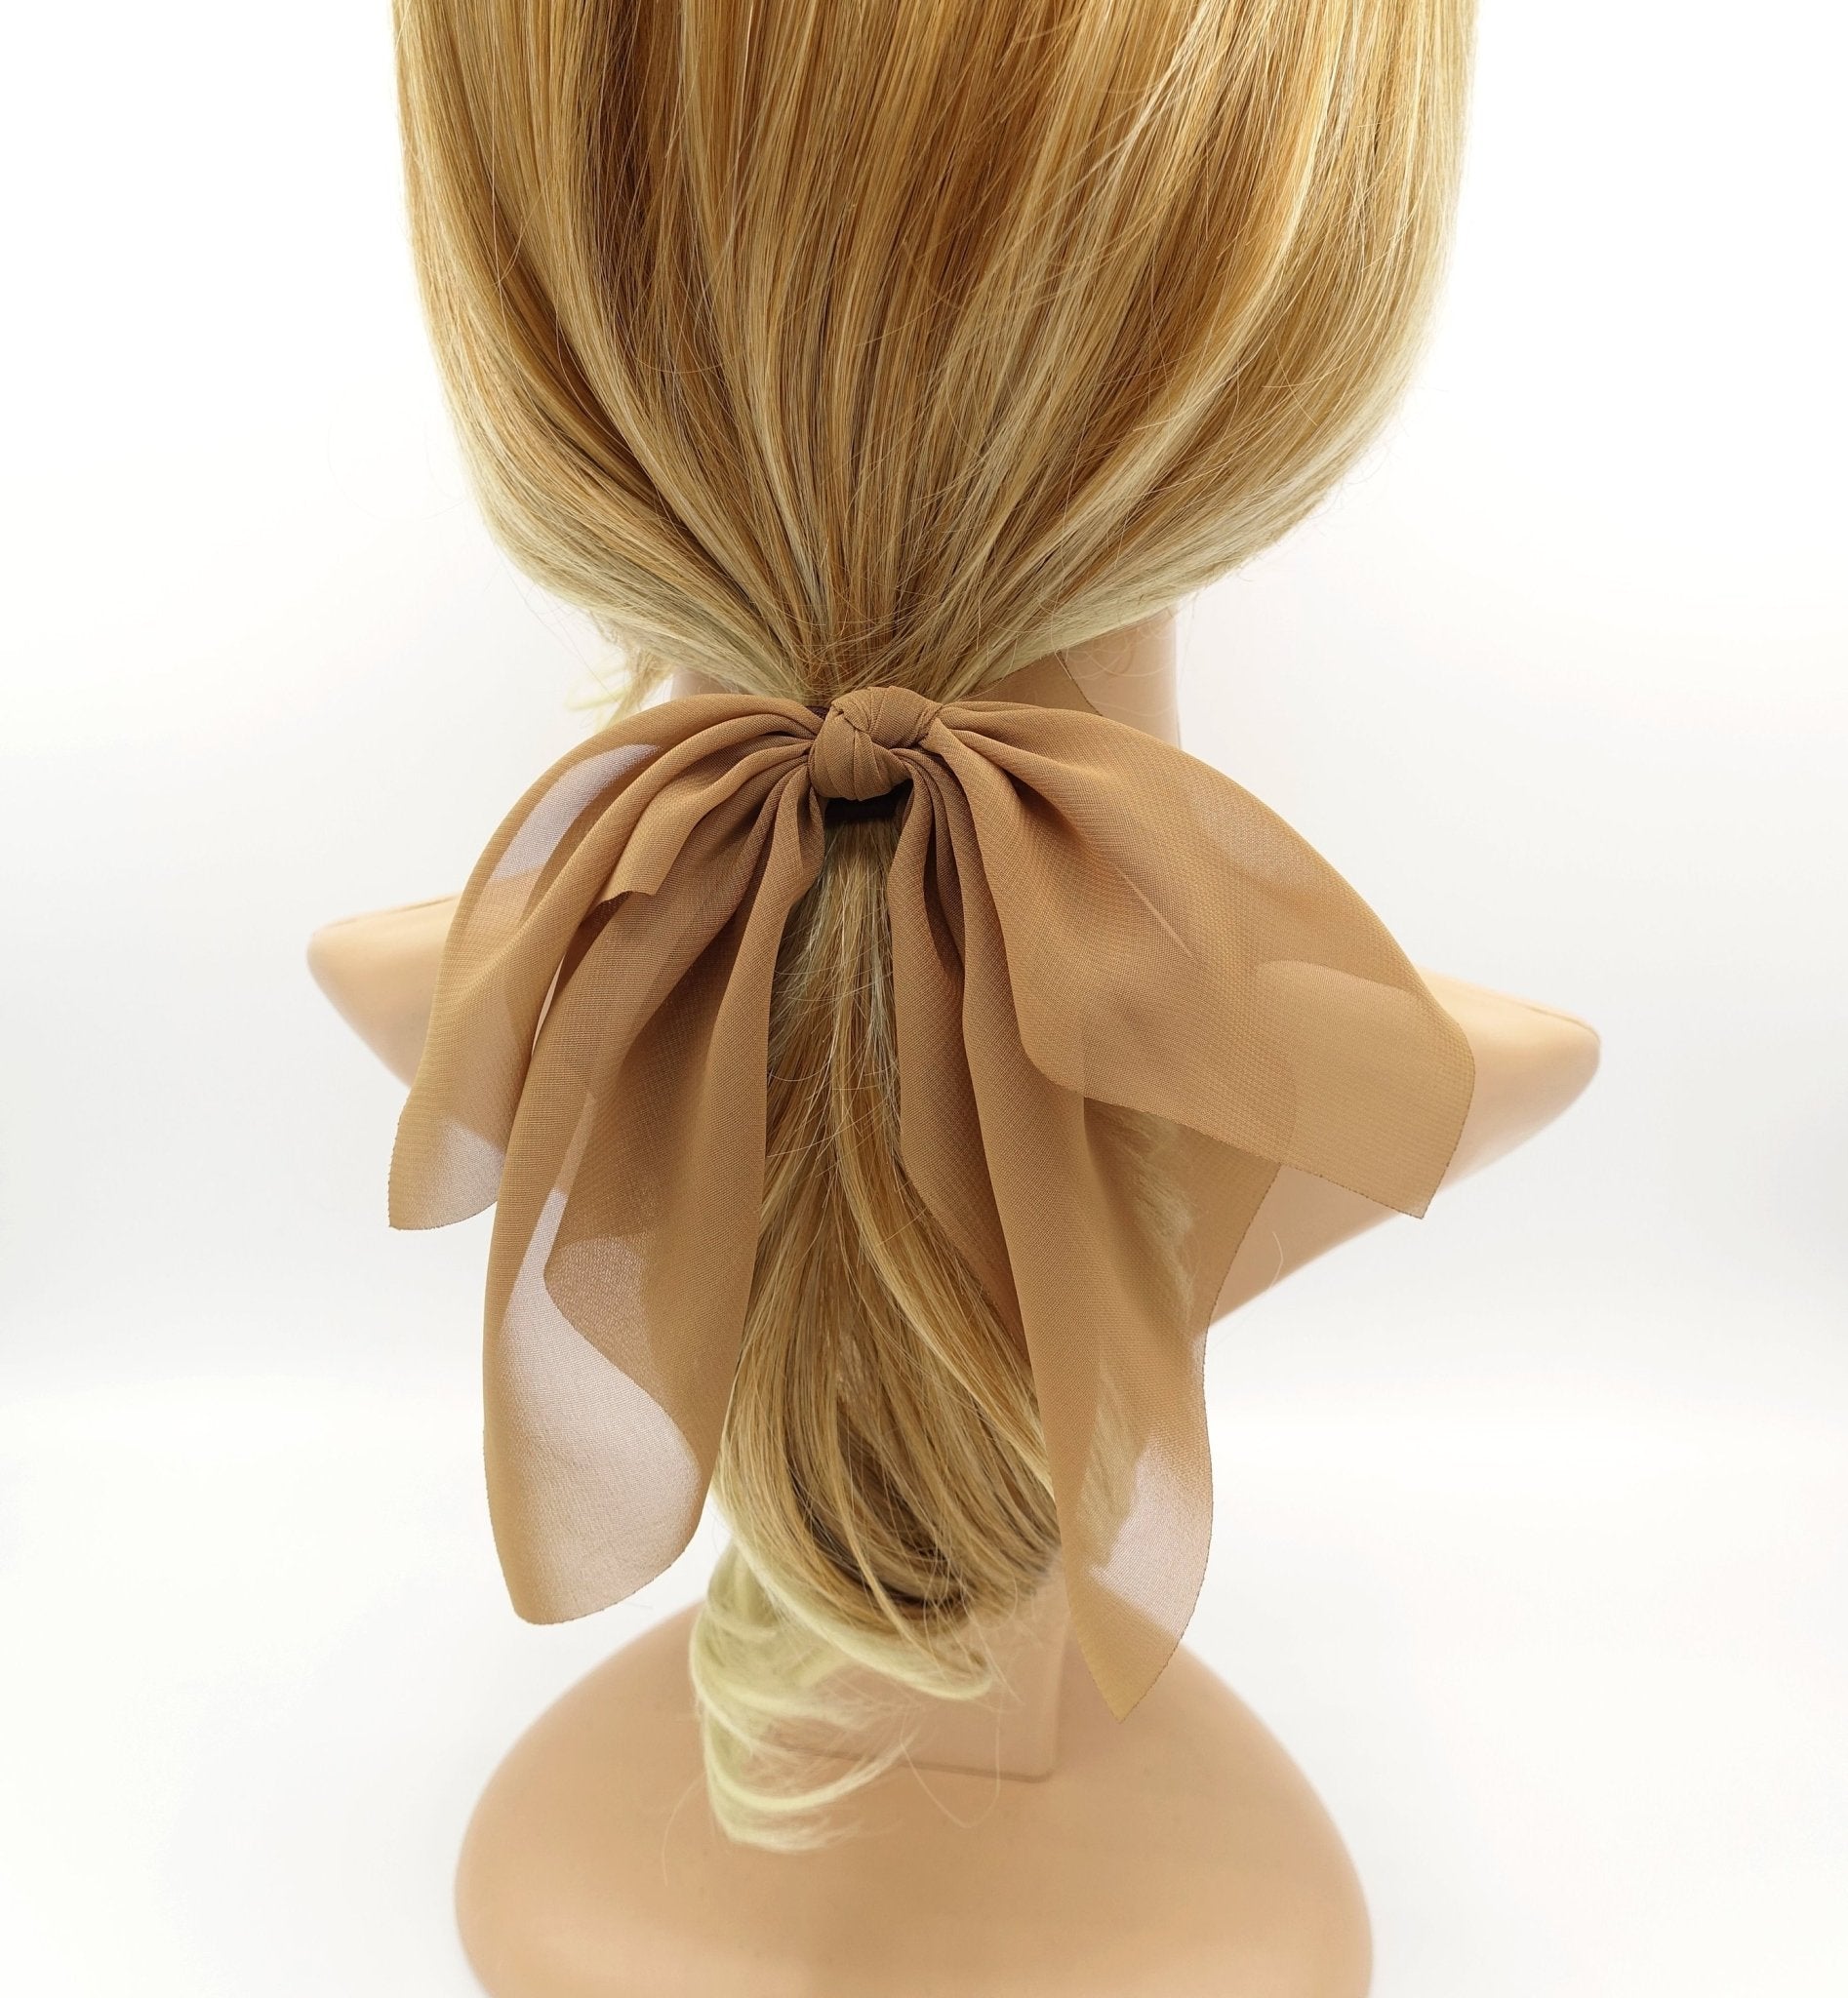 VeryShine chiffon bow wing knot hair elastic ponytail holder women hair accessory